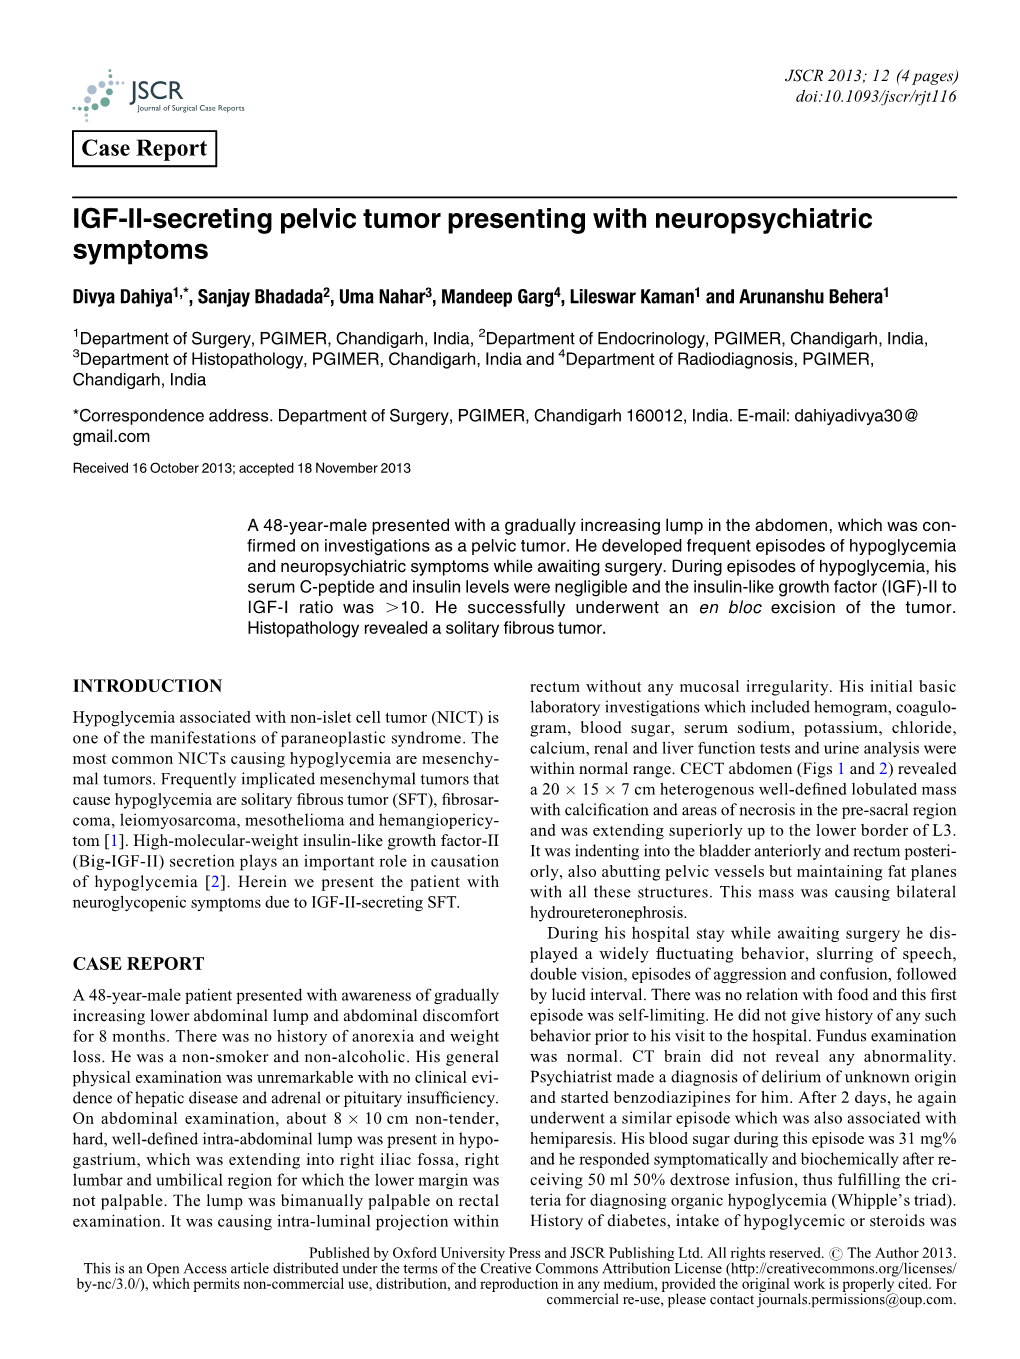 IGF-II-Secreting Pelvic Tumor Presenting with Neuropsychiatric Symptoms